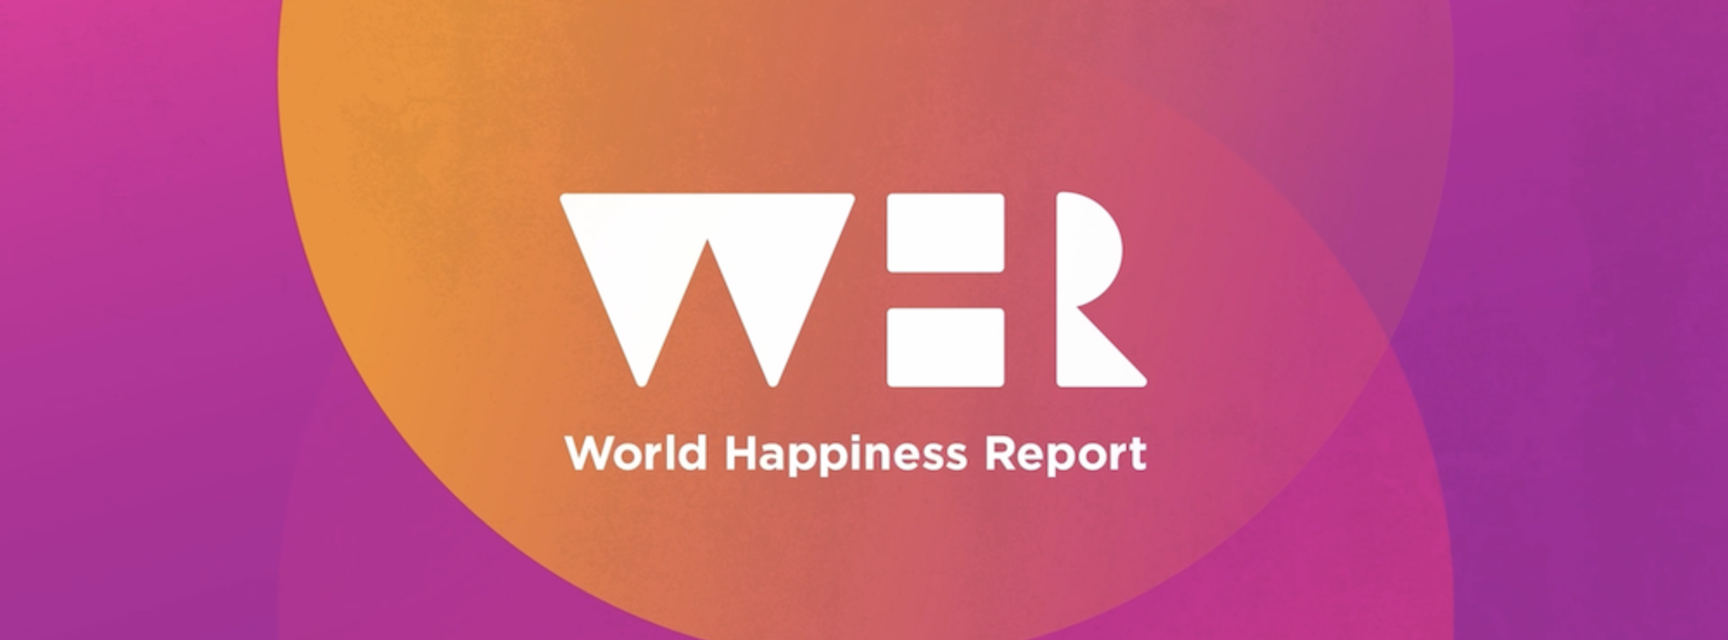 World Happiness Report Logo